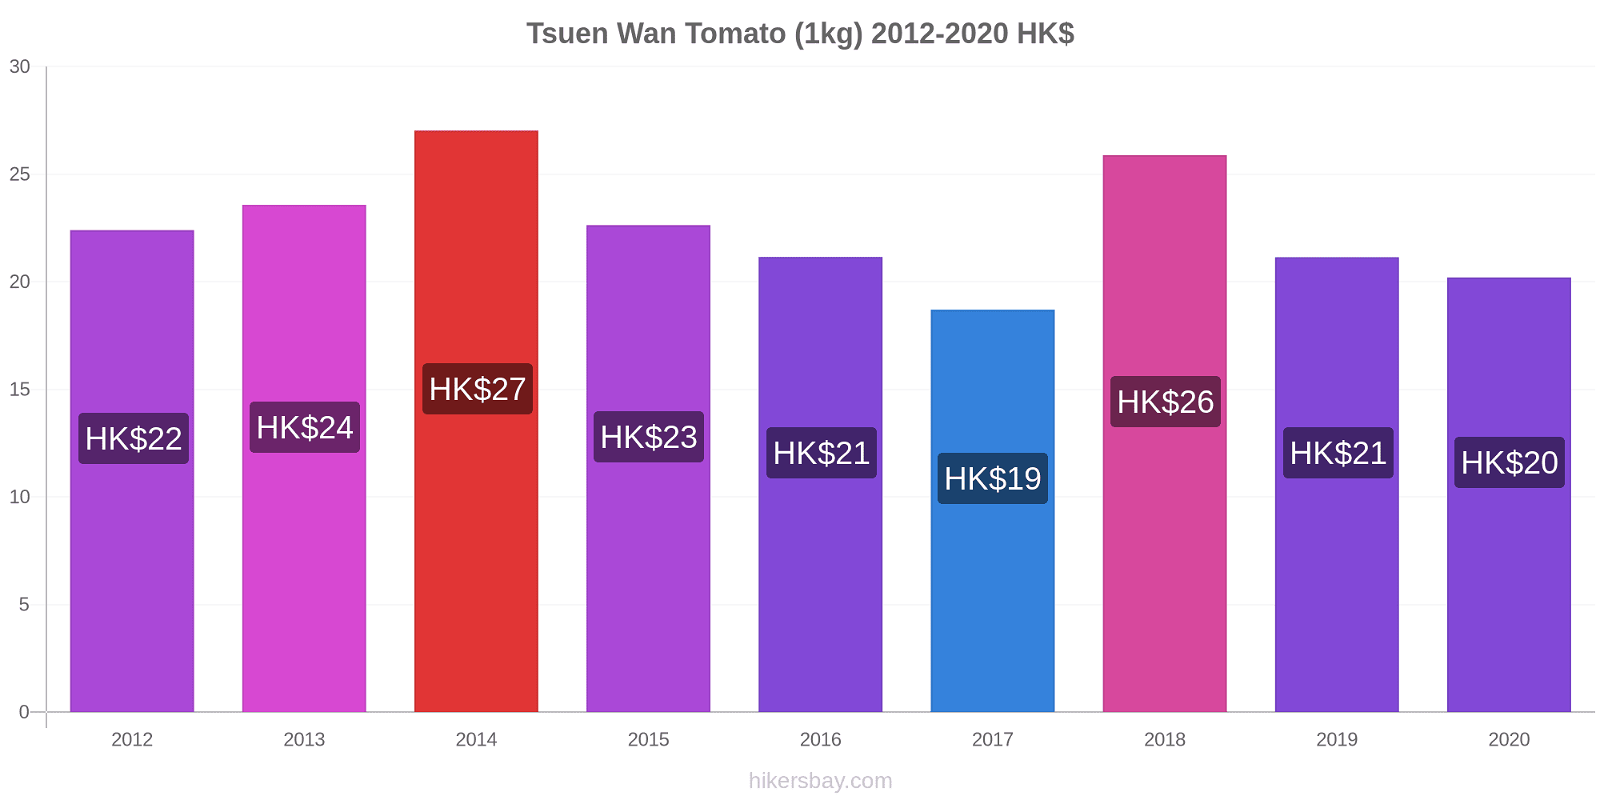 Tsuen Wan price changes Tomato (1kg) hikersbay.com